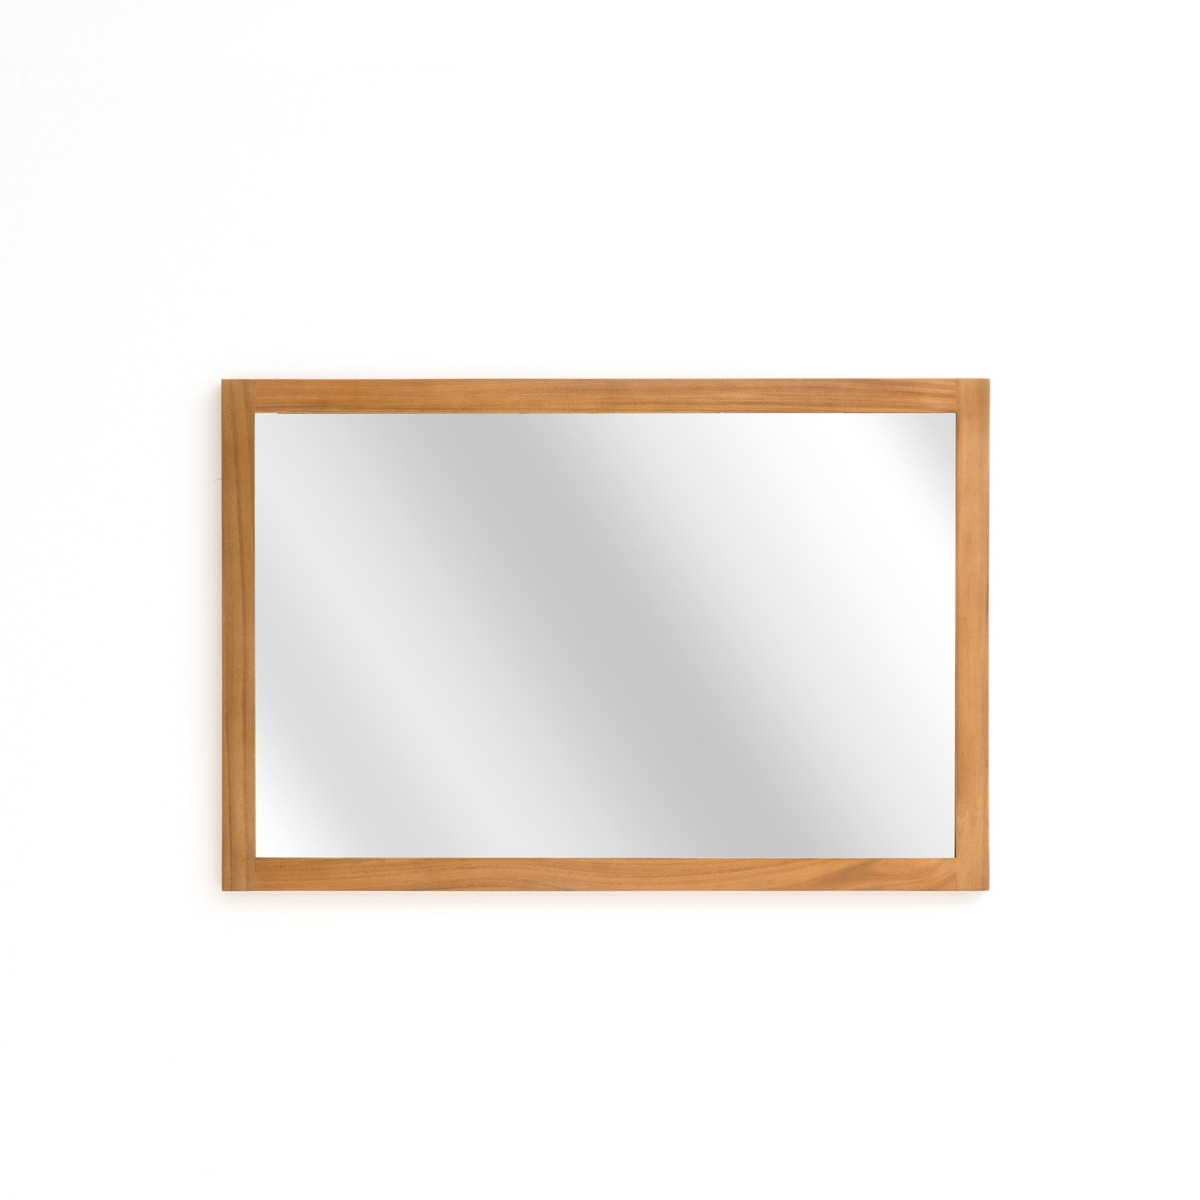 Oiled Acacia 90cm Rectangular Bathroom Mirror - image 1